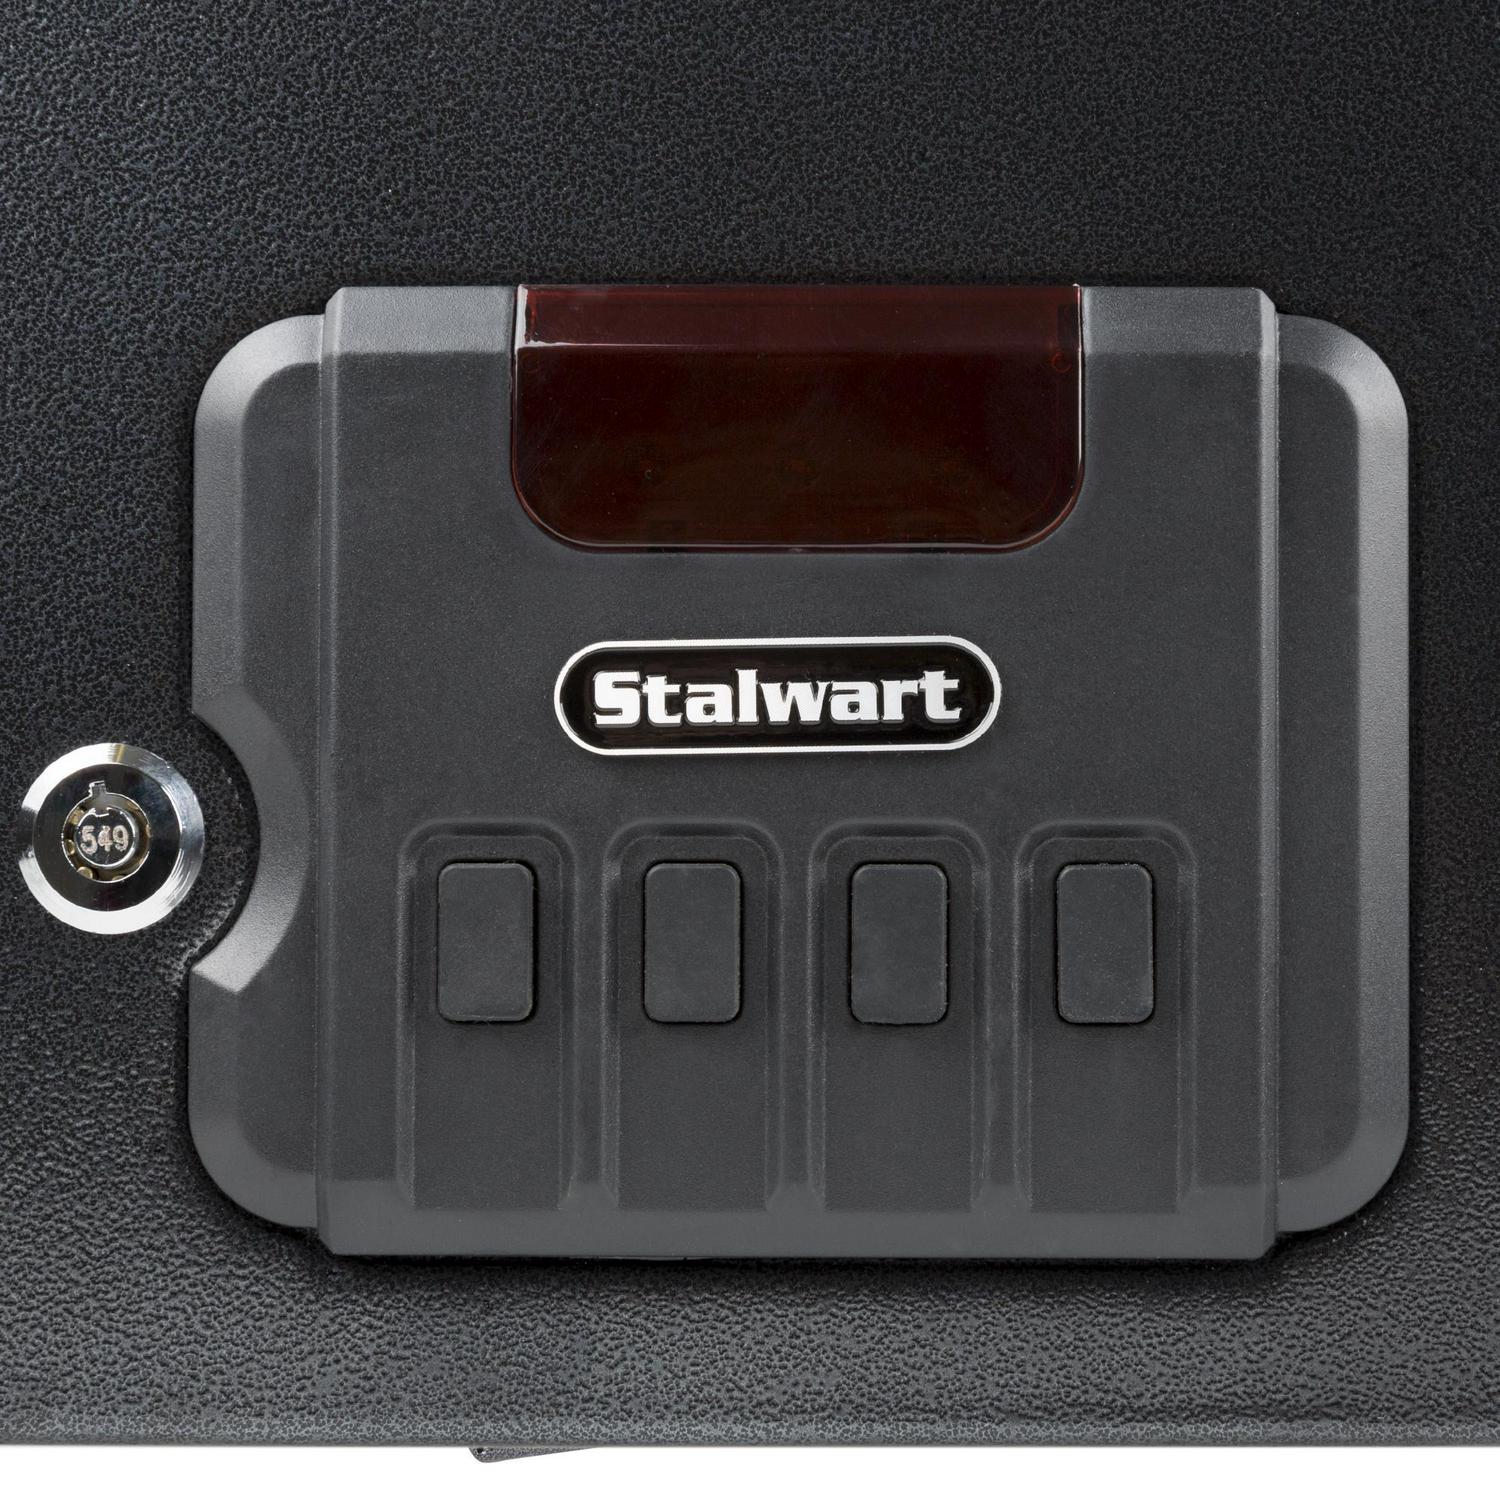 Stalwart Gun Safe with Digital Lock and Manual Override Keys